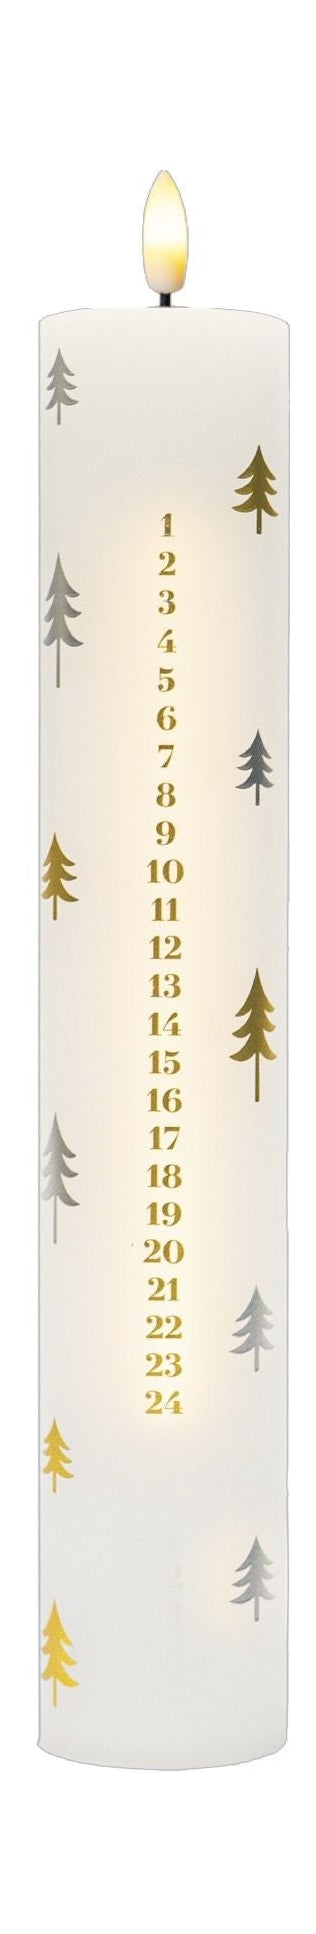 SIRIUS Sille Calendar Candle Ø5X H29,8cm, blanc / or / argent